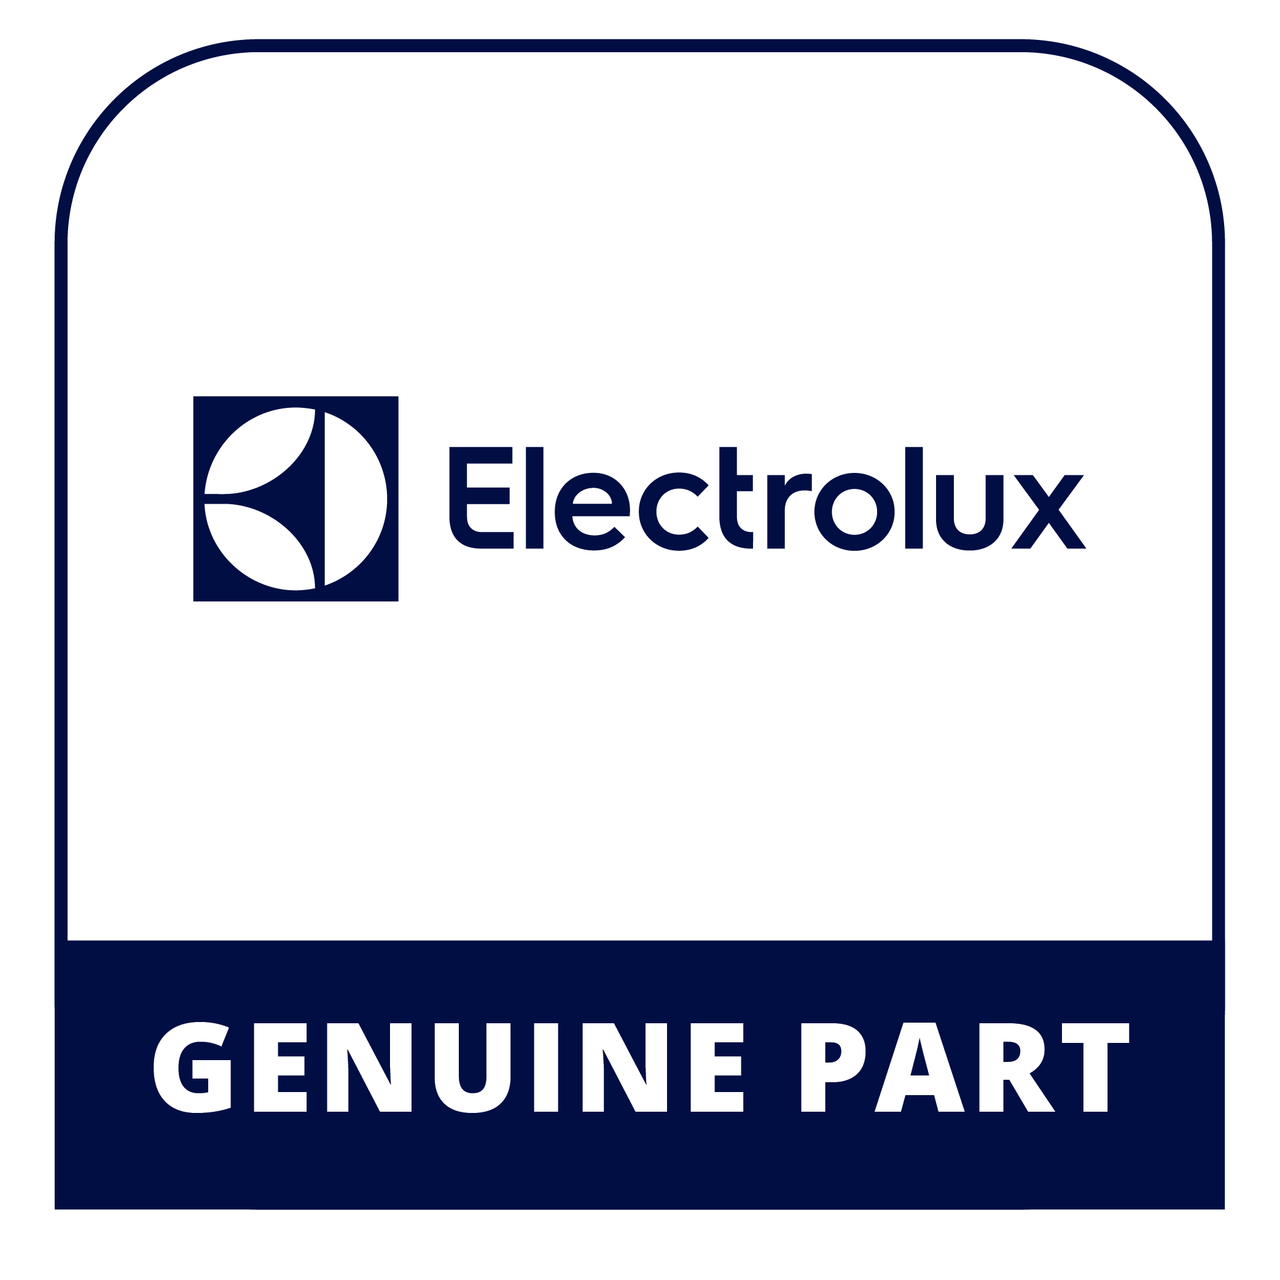 Frigidaire - Electrolux 316552102 Trim - Genuine Electrolux Part